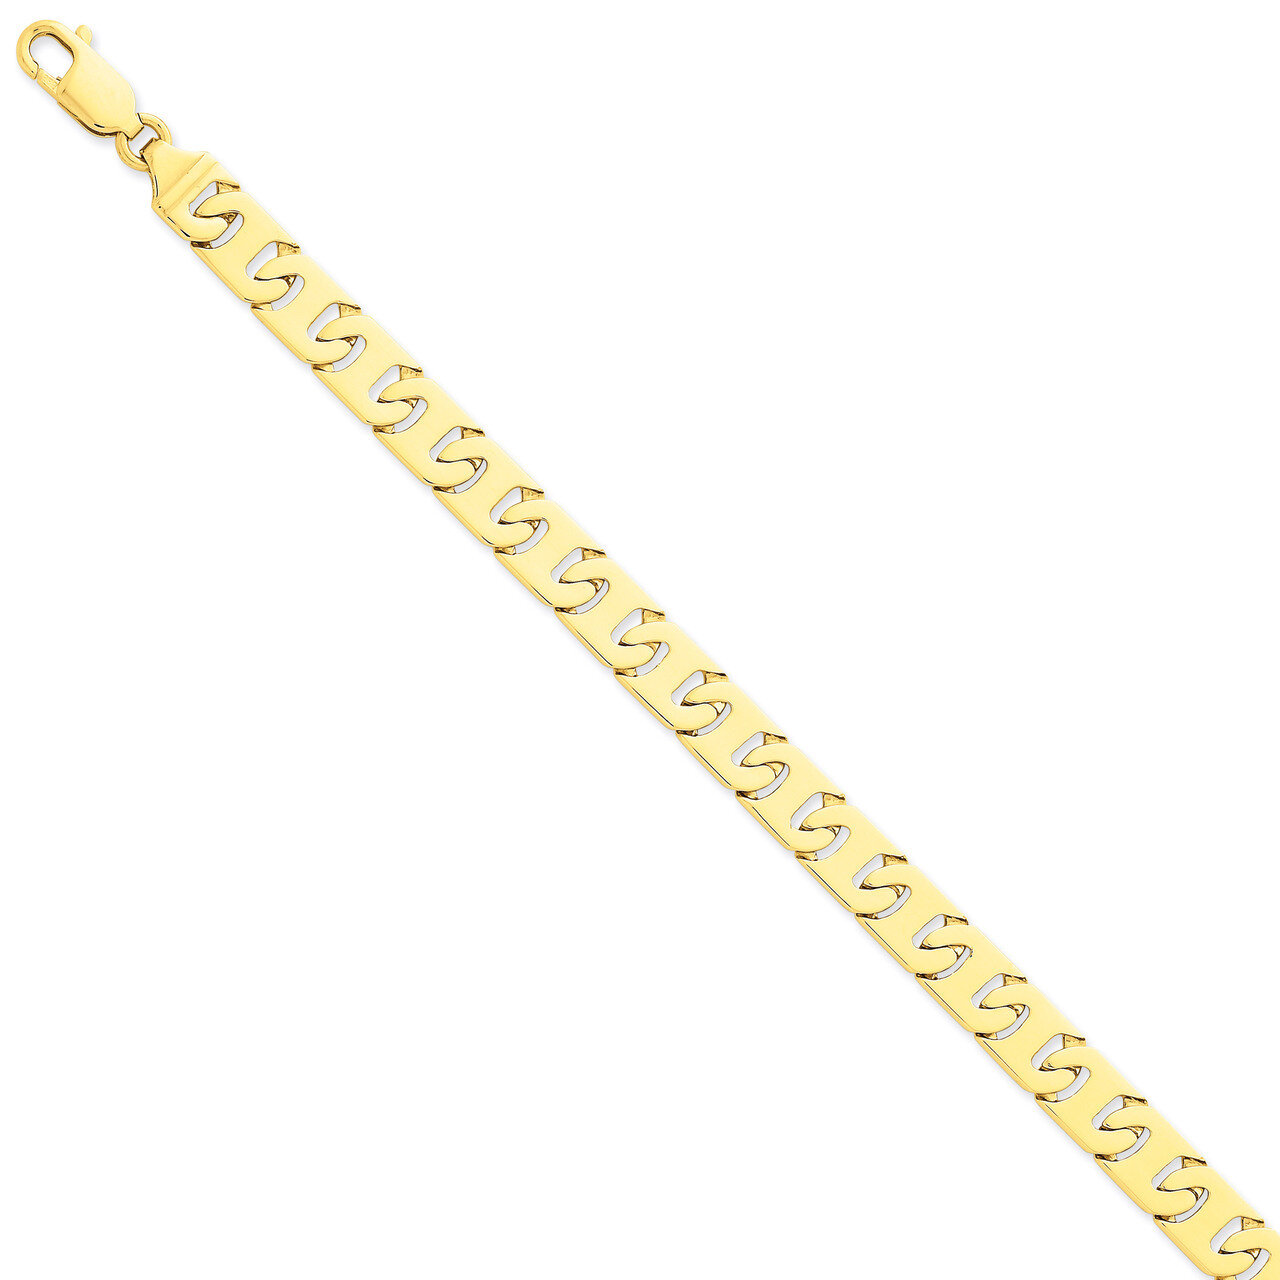 8mm Hand-Polished Fancy Link Chain 18 Inch 14k Gold LK172-18